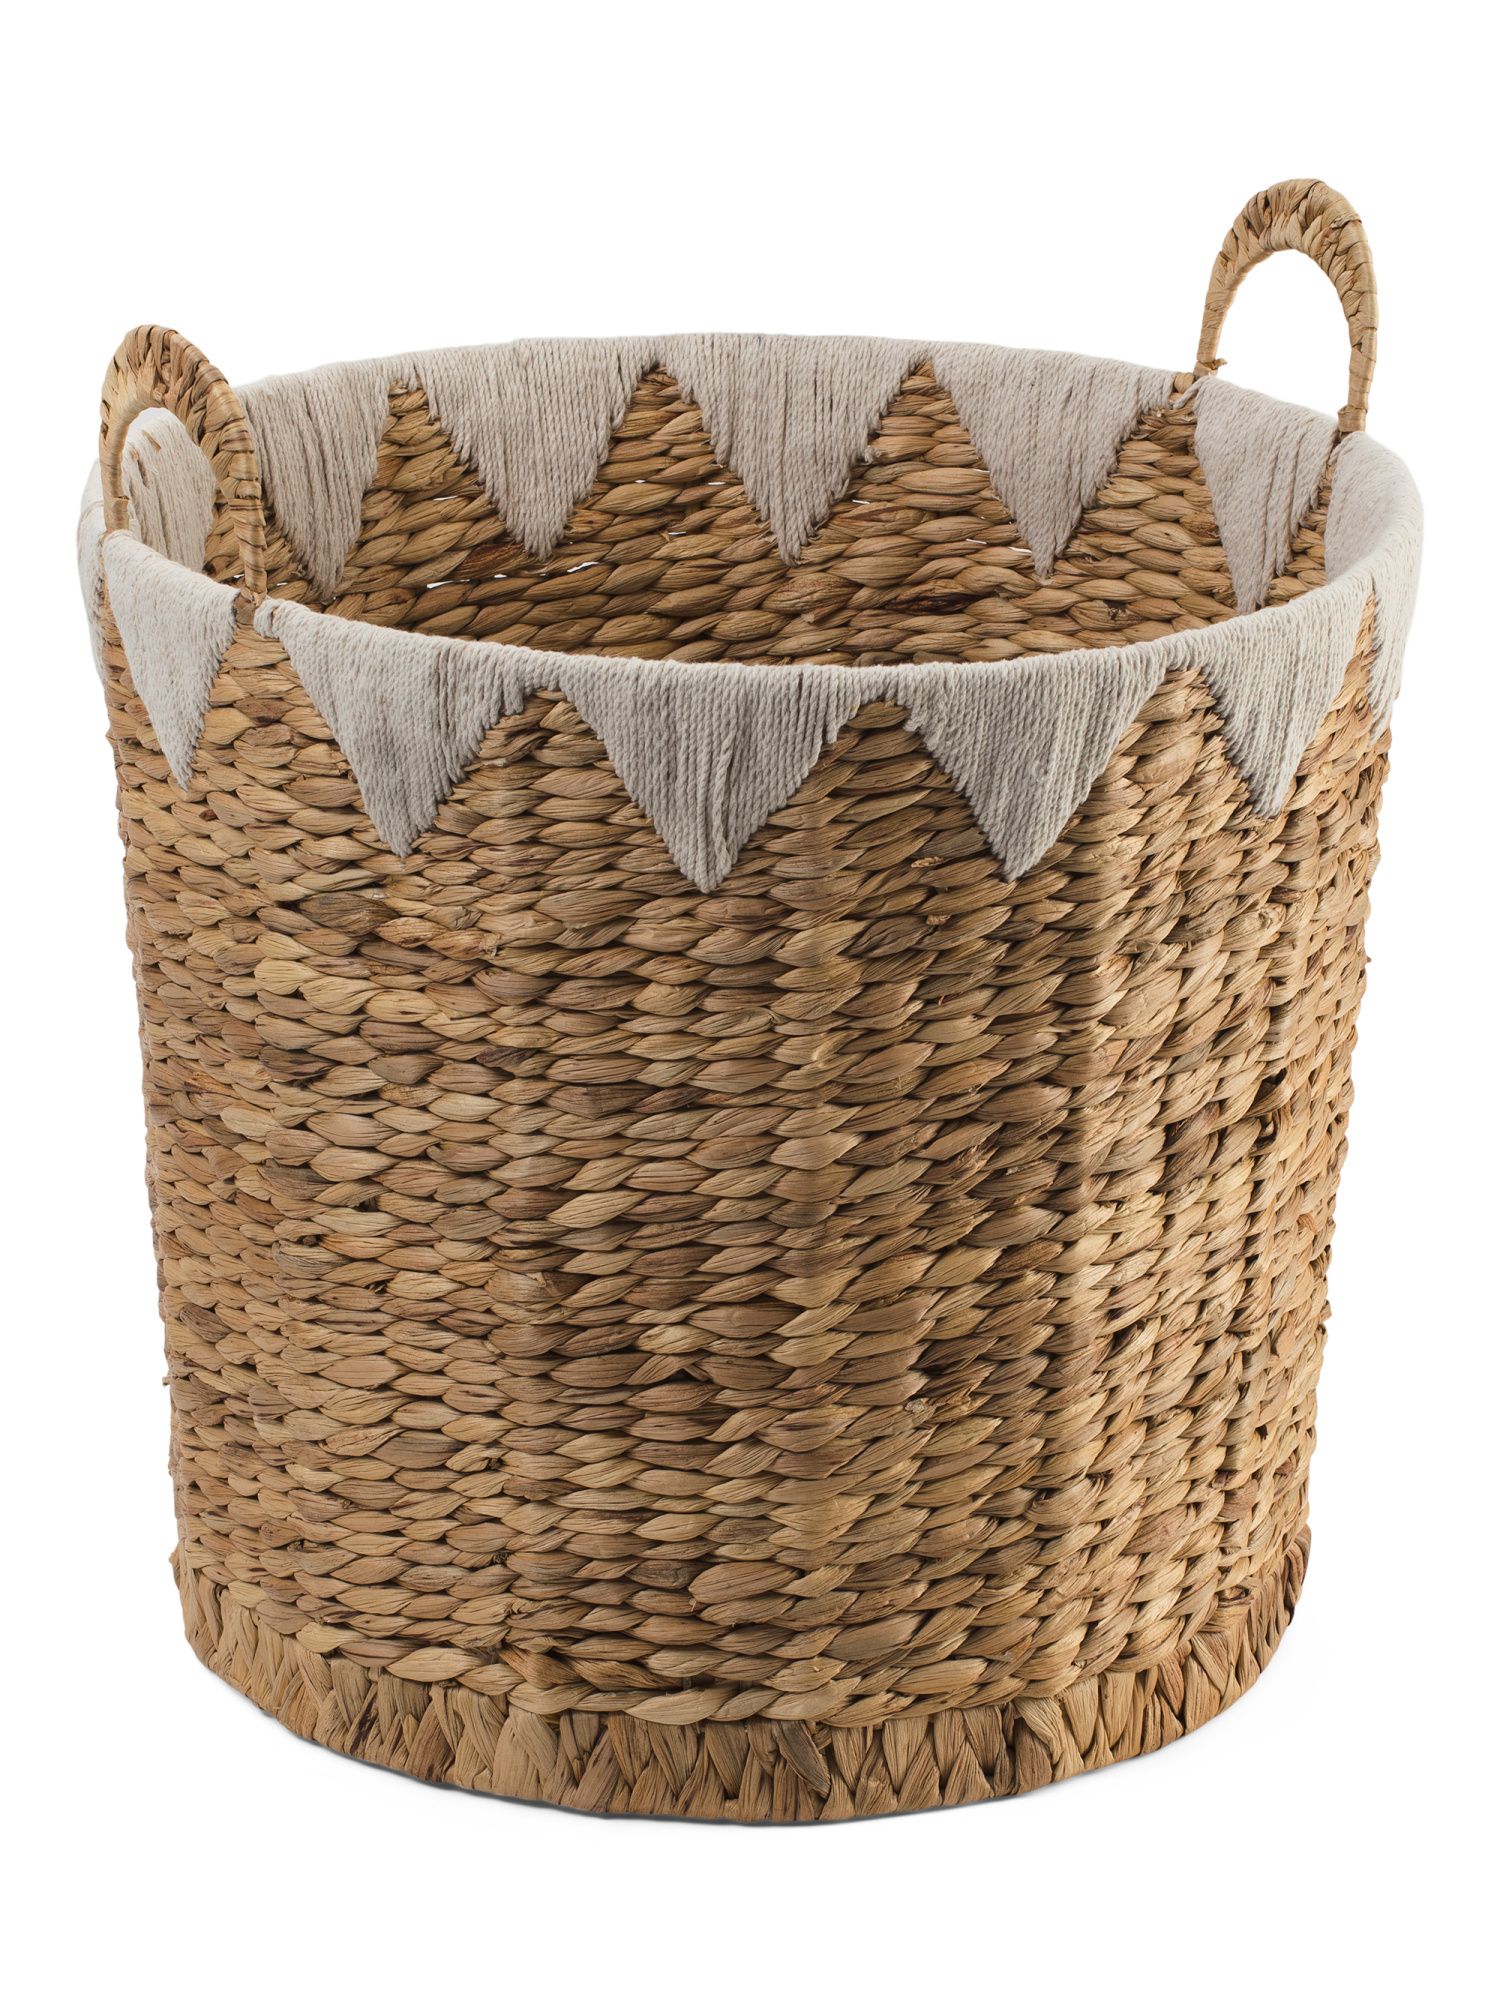 Medium Ricenut Round Basket With Yarn Top Detail | TJ Maxx